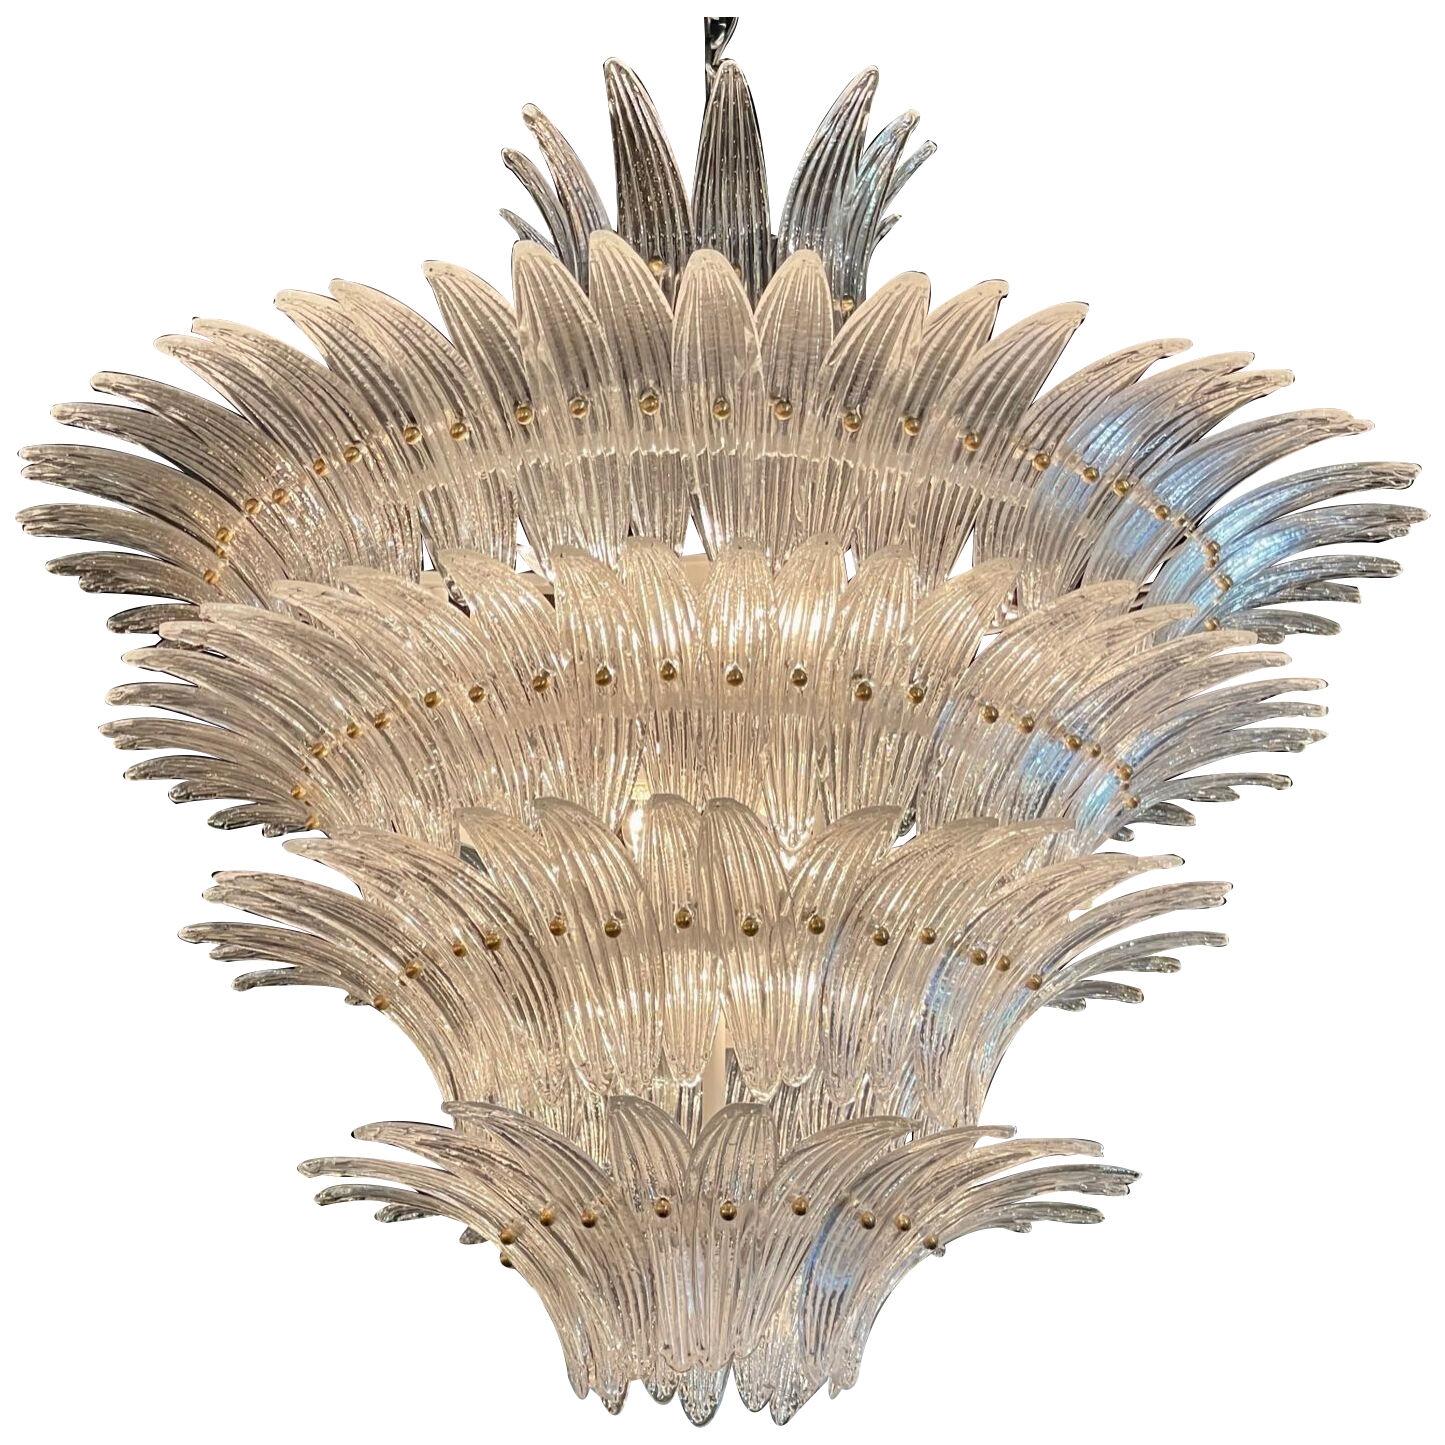 Modern Murano Glass Palm Leaf Chandelier